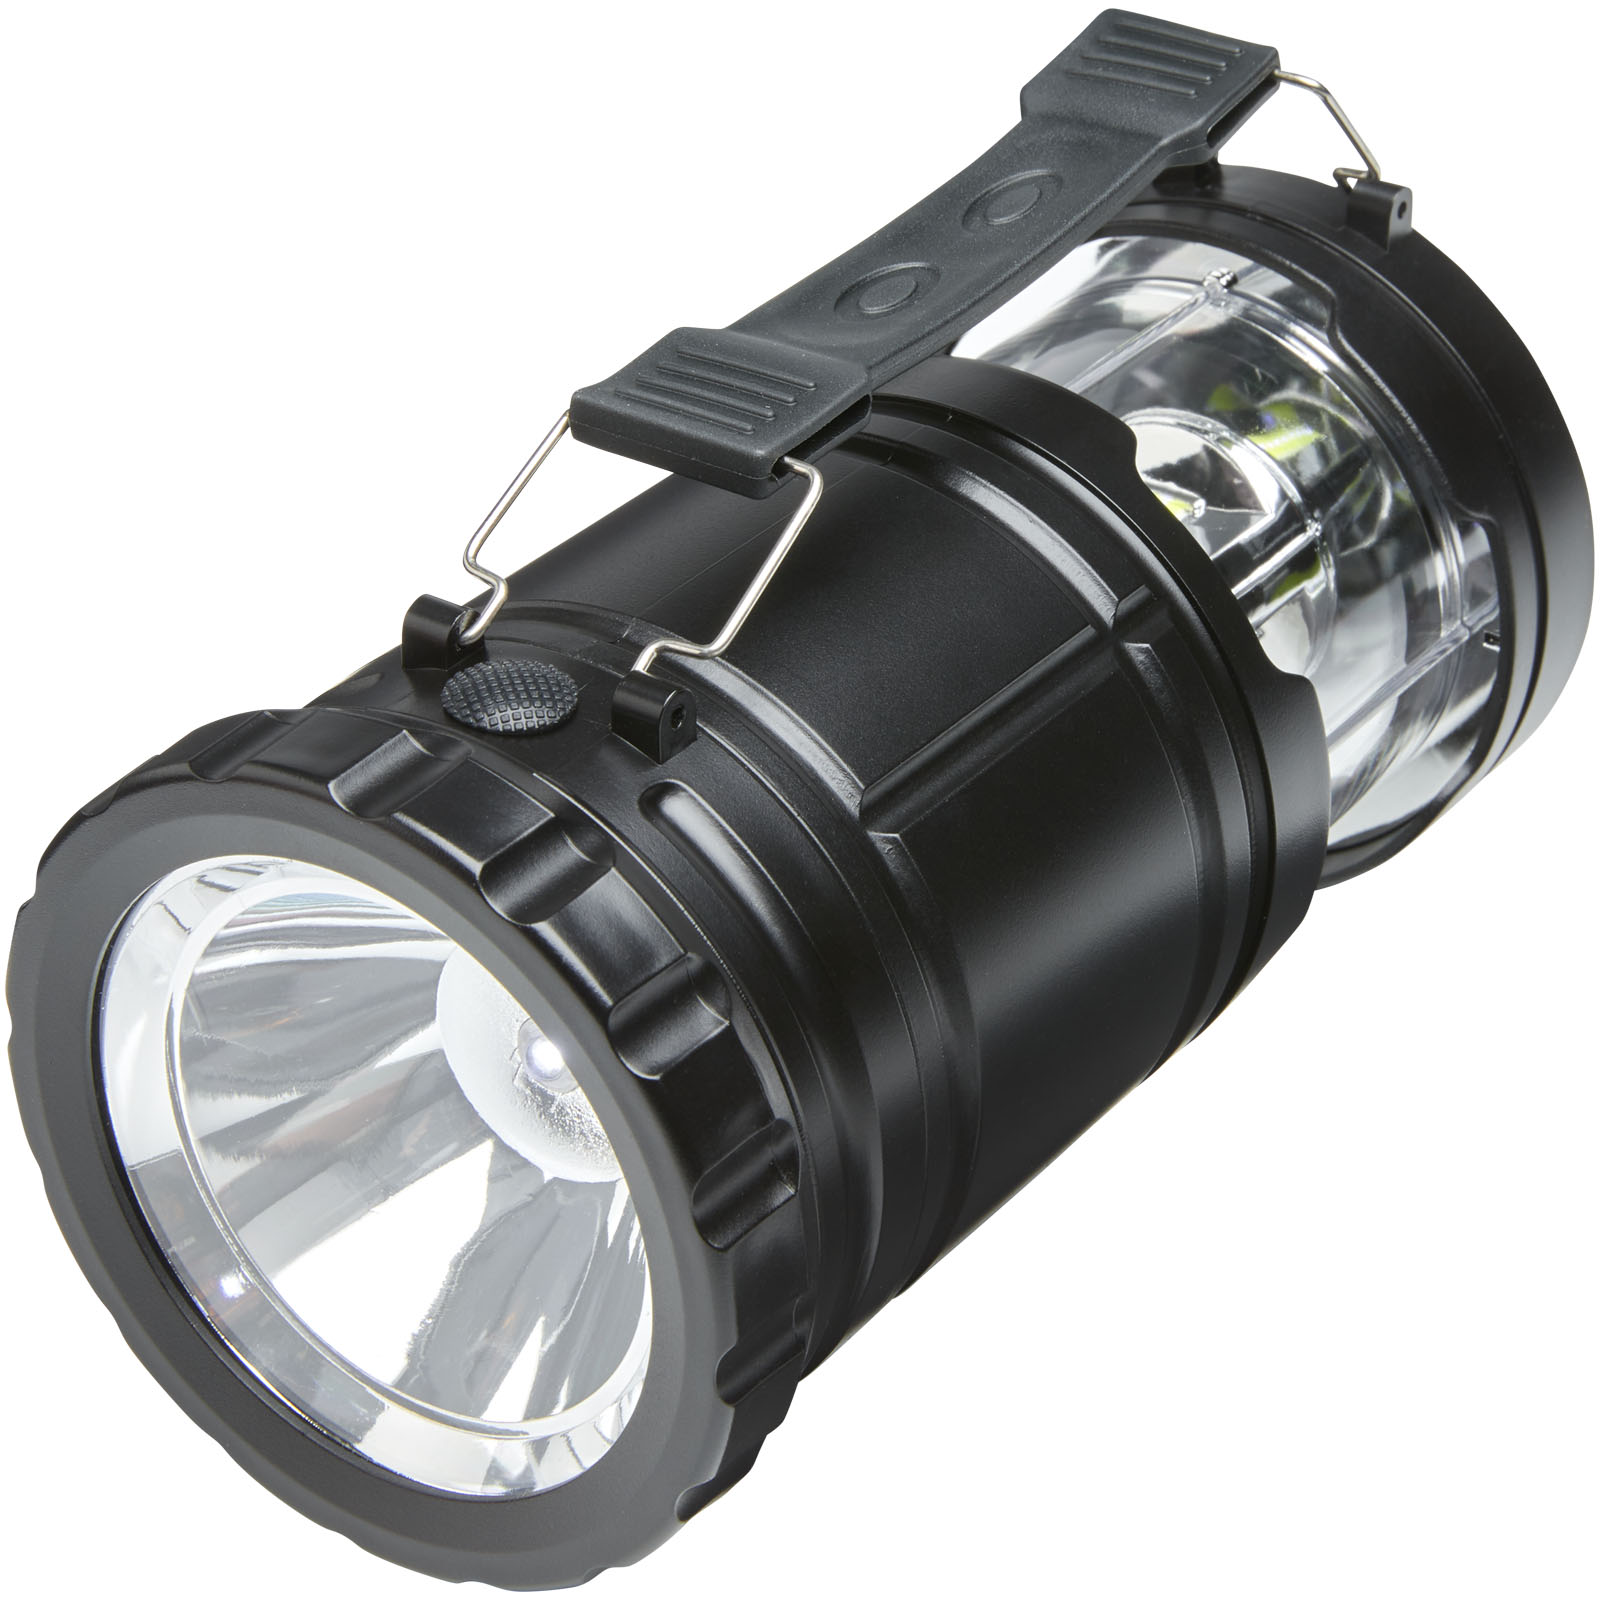 2-in-1 Lantern and Flashlight - Sparsholt - Abington